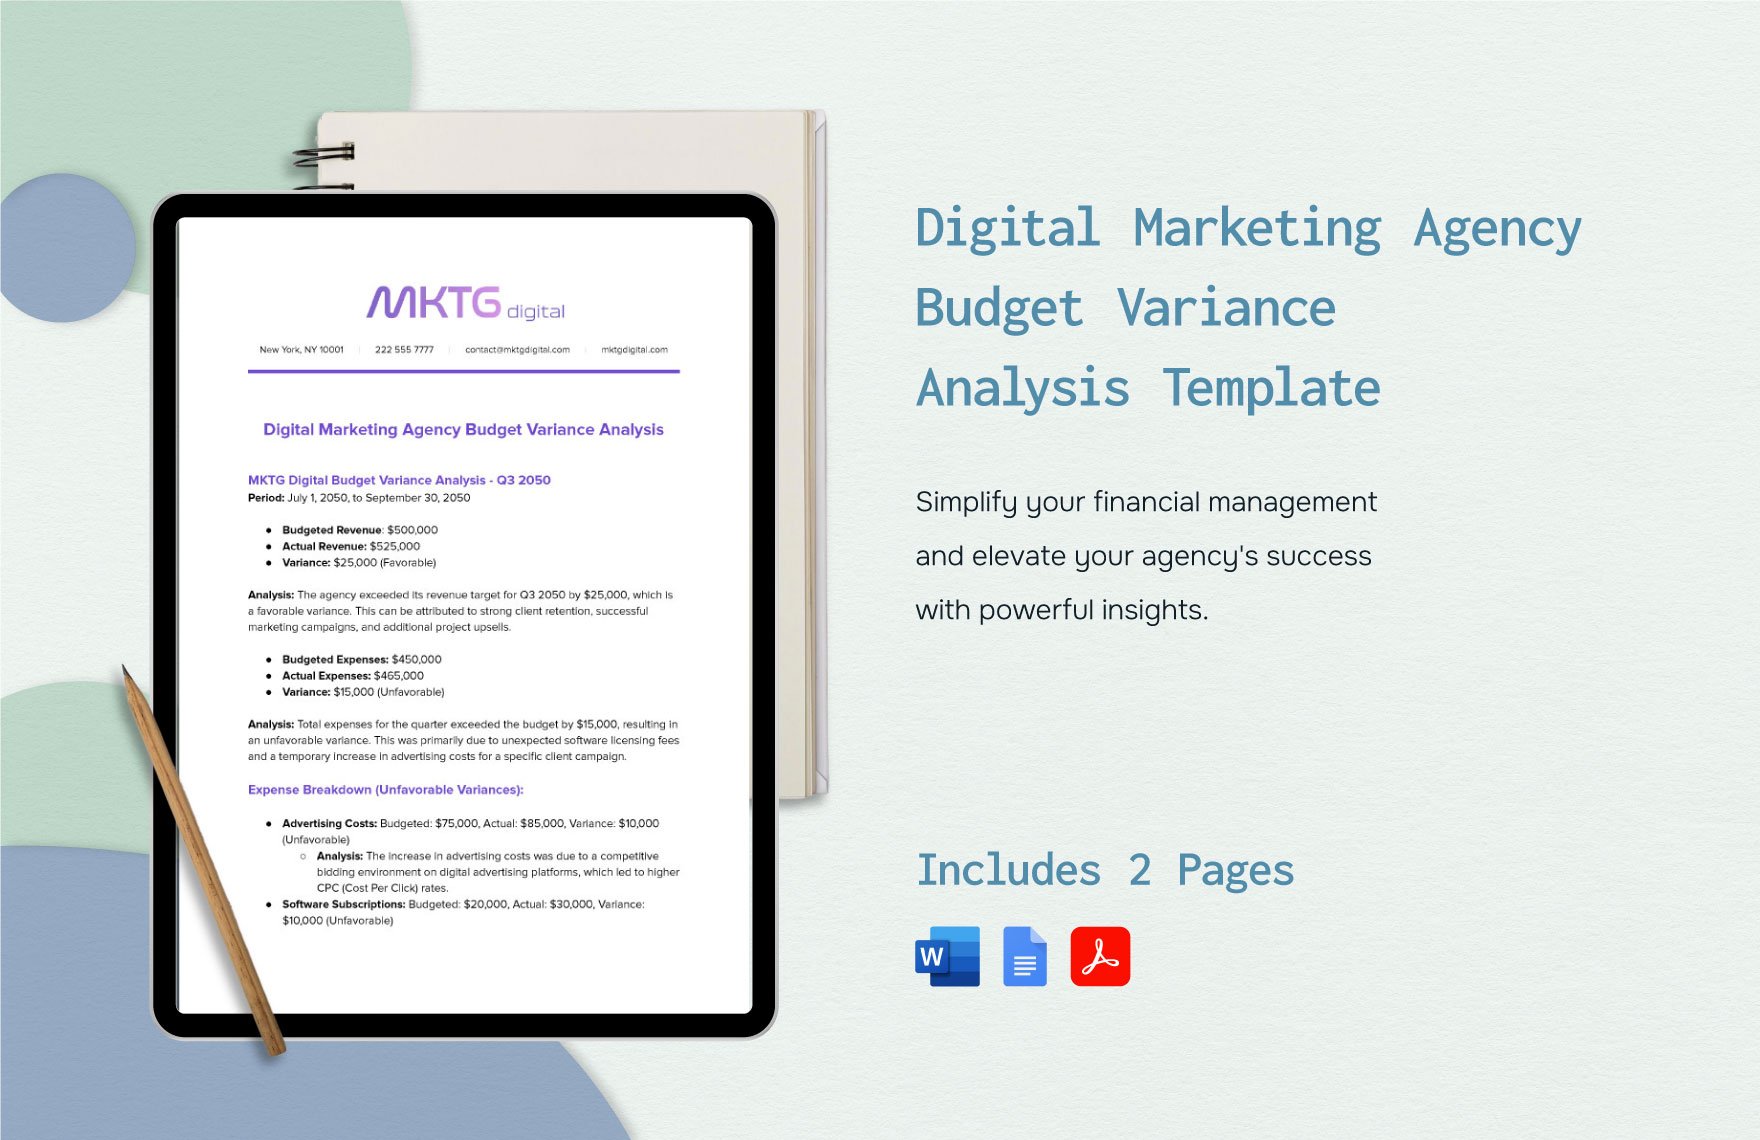 Digital Marketing Agency Budget Variance Analysis Template